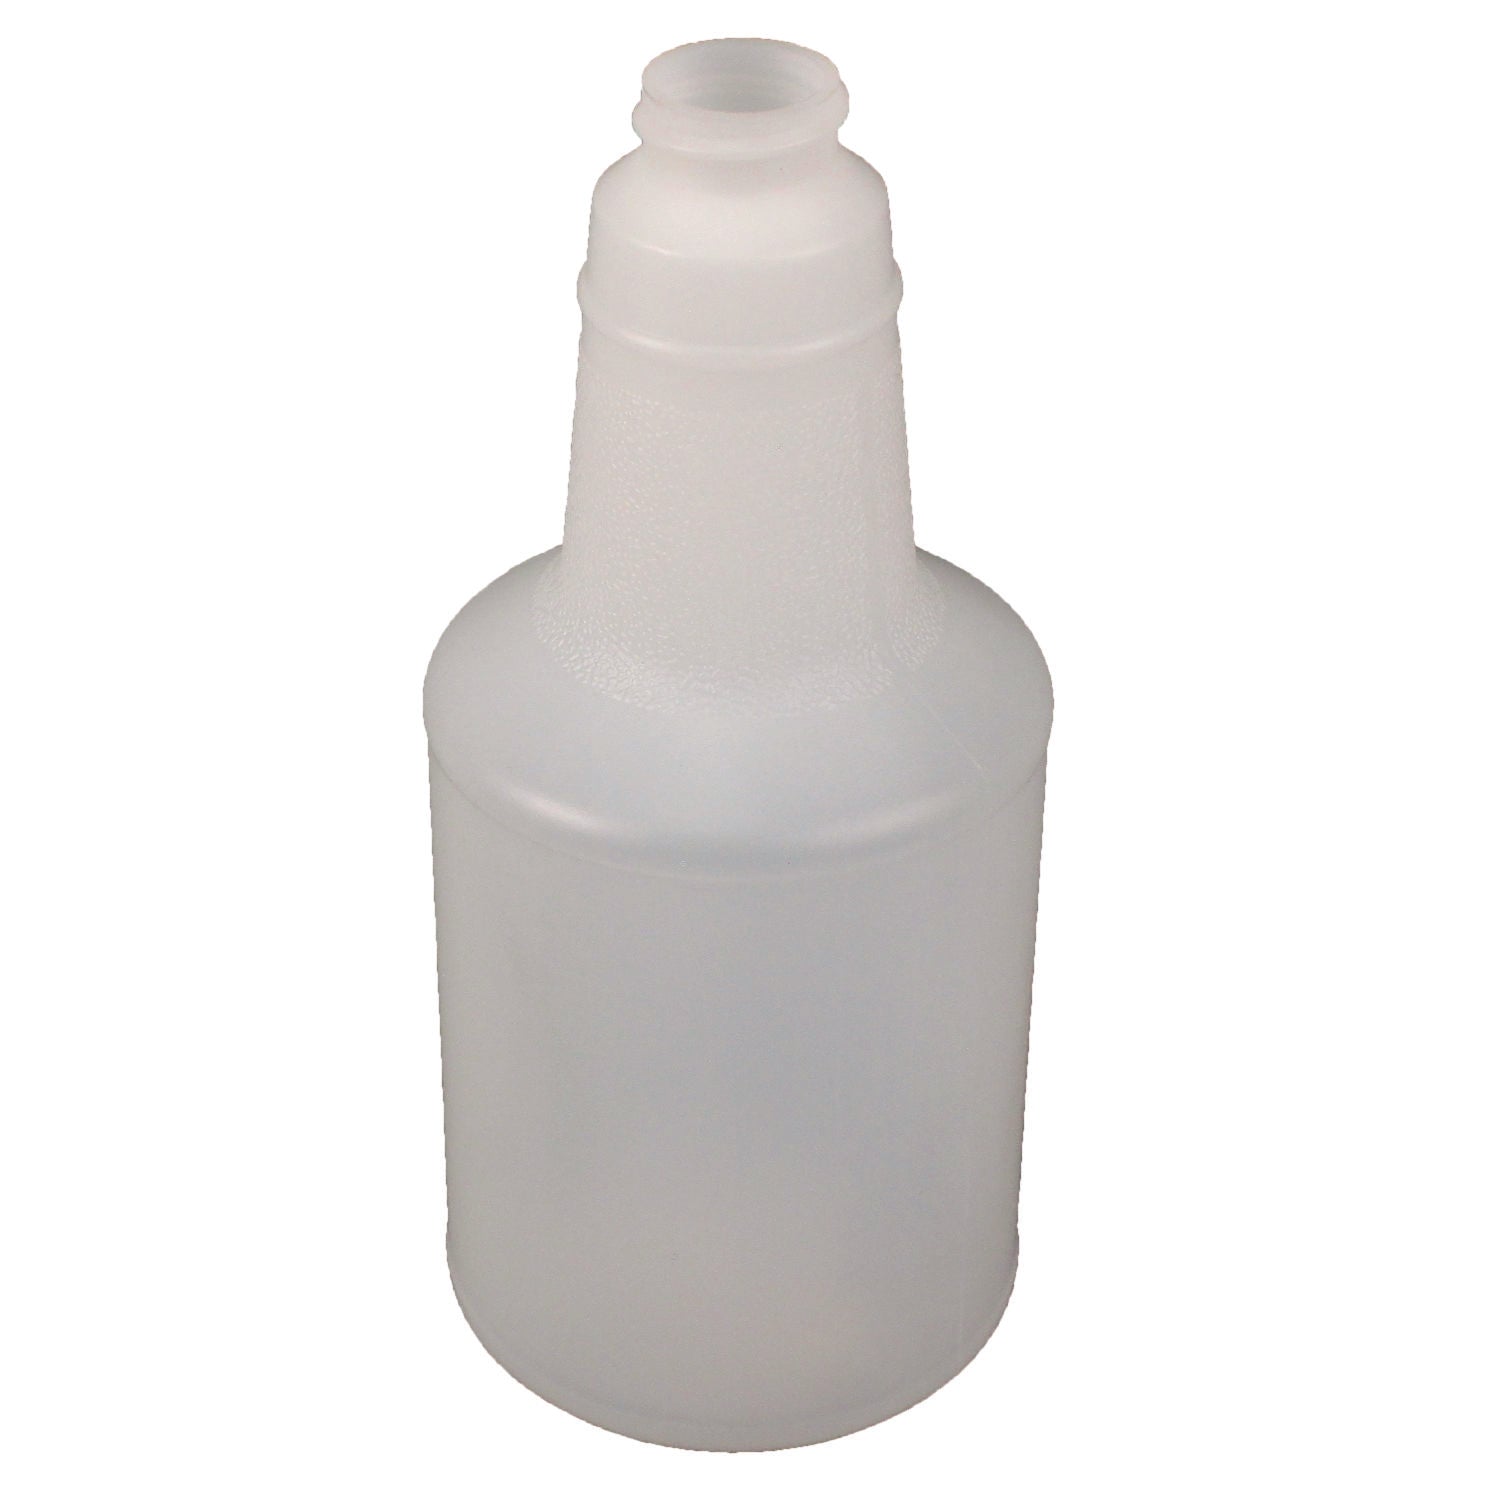 plastic-bottles-with-graduations-24-oz-clear-24-carton_imp5024wg2491 - 2